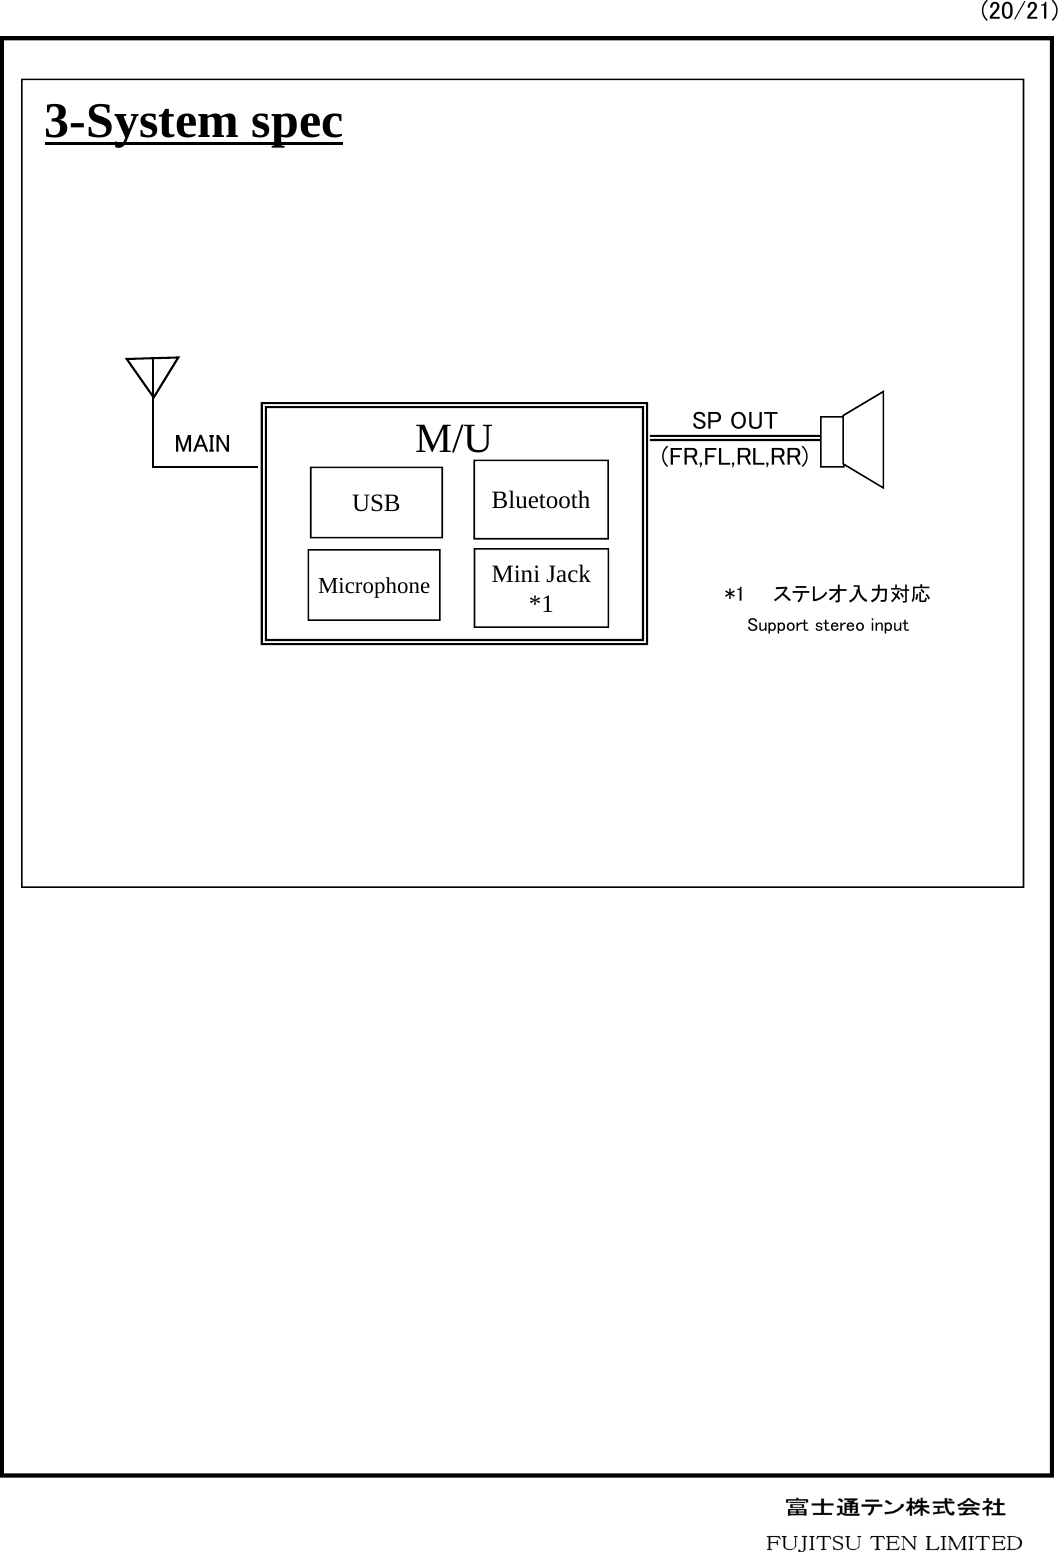 3-System spec*1 ステレオ入力対応Support stereo inputSP OUT(FR,FL,RL,RR)M/UUSBMini Jack*1MAINBluetoothMicrophone(20/21)